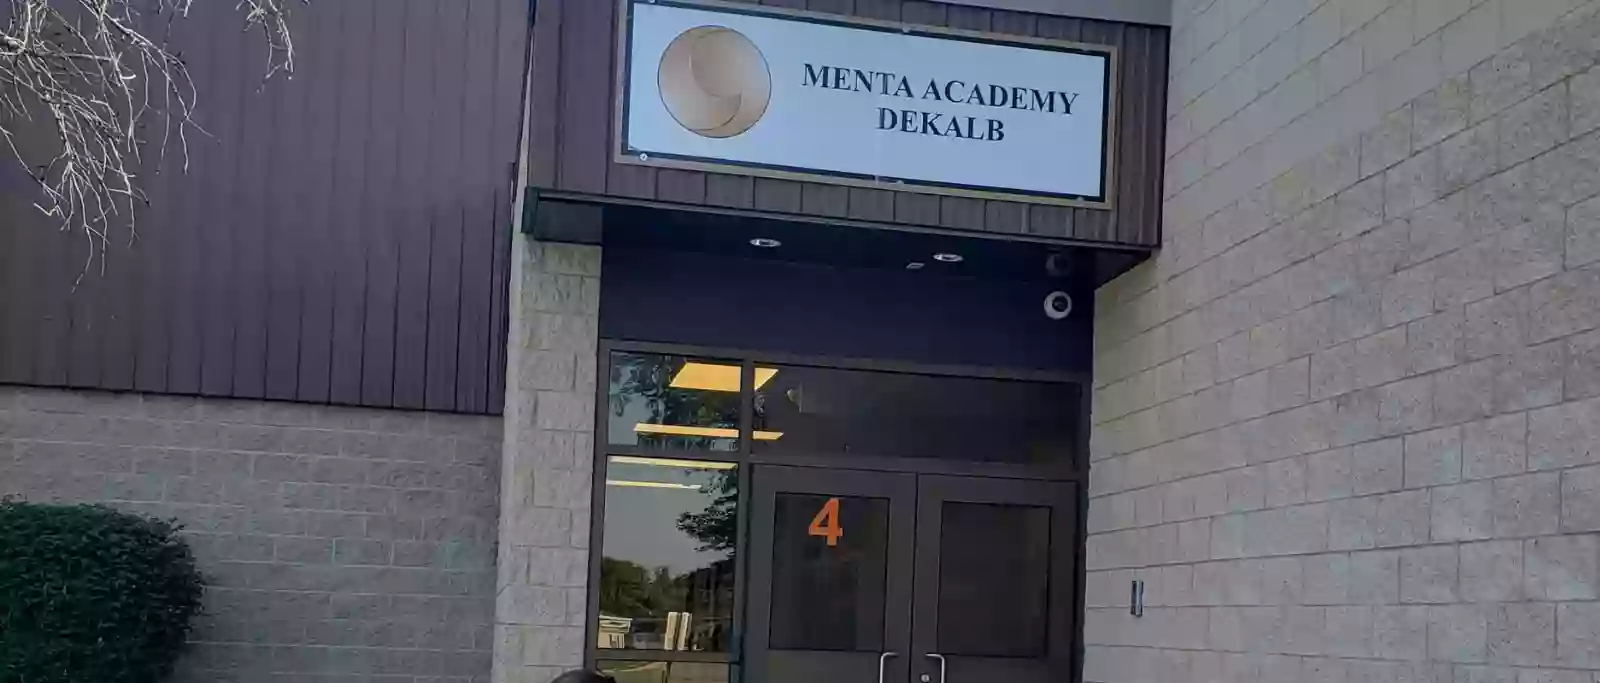 Menta Academy DeKalb